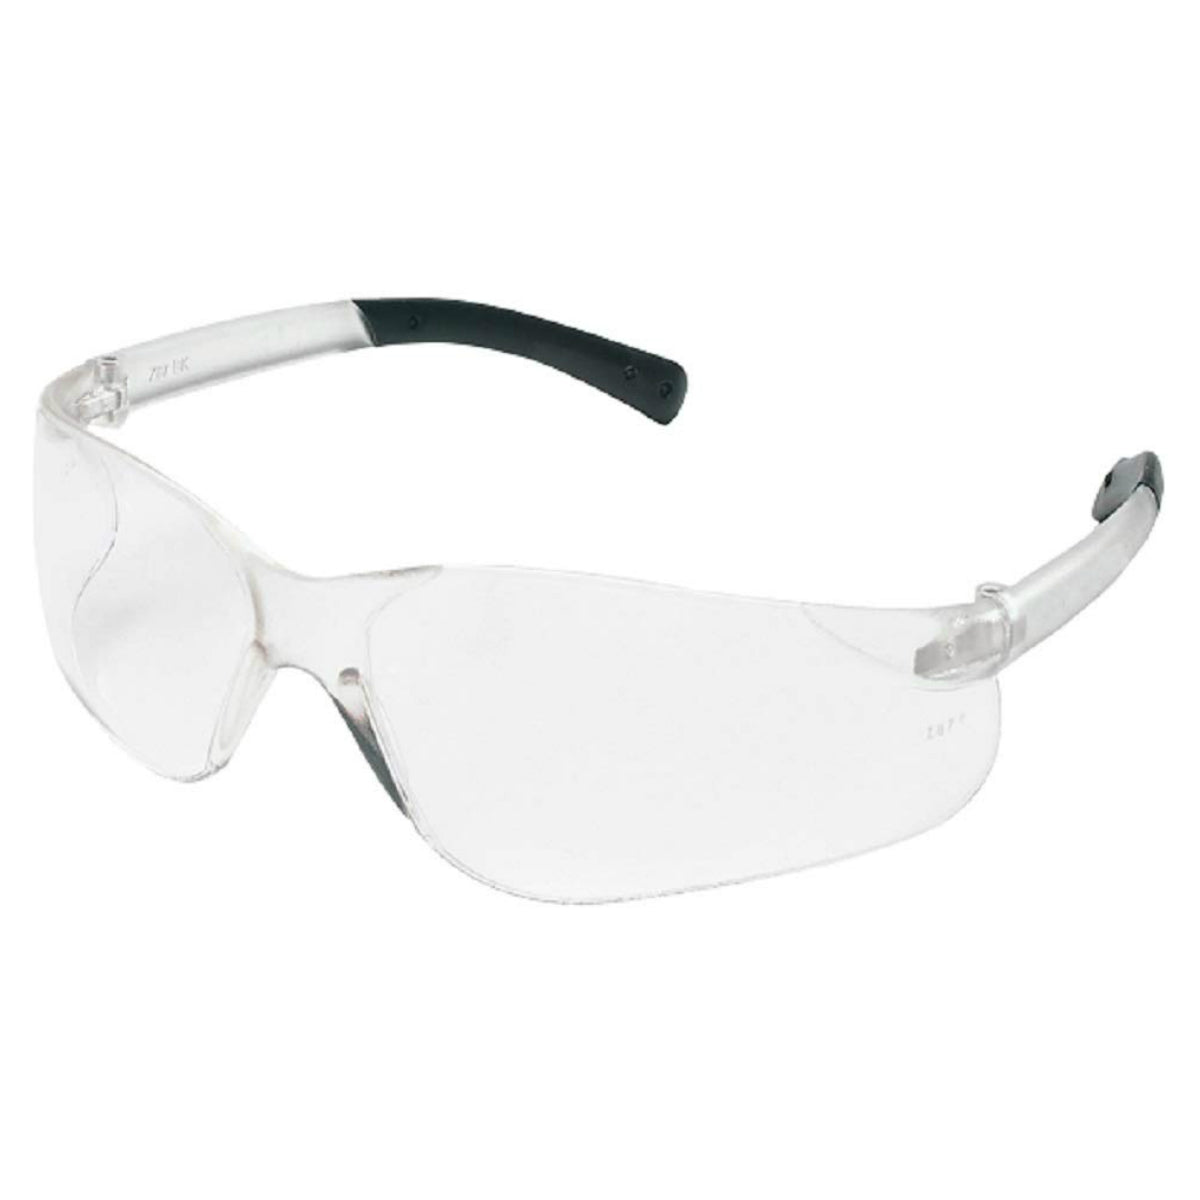 Msa Safety Works Cbkh20 2.0 Magnifying Bifocal Safety Glasses, Clear Lens